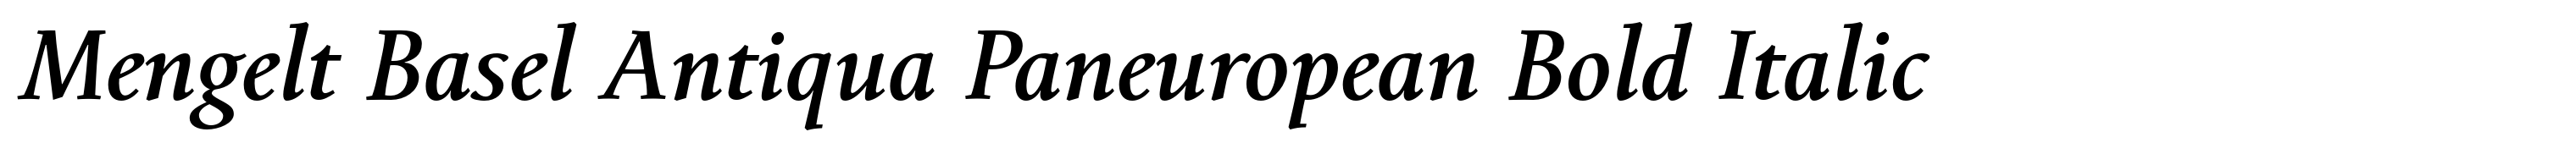 Mengelt Basel Antiqua Paneuropean Bold Italic